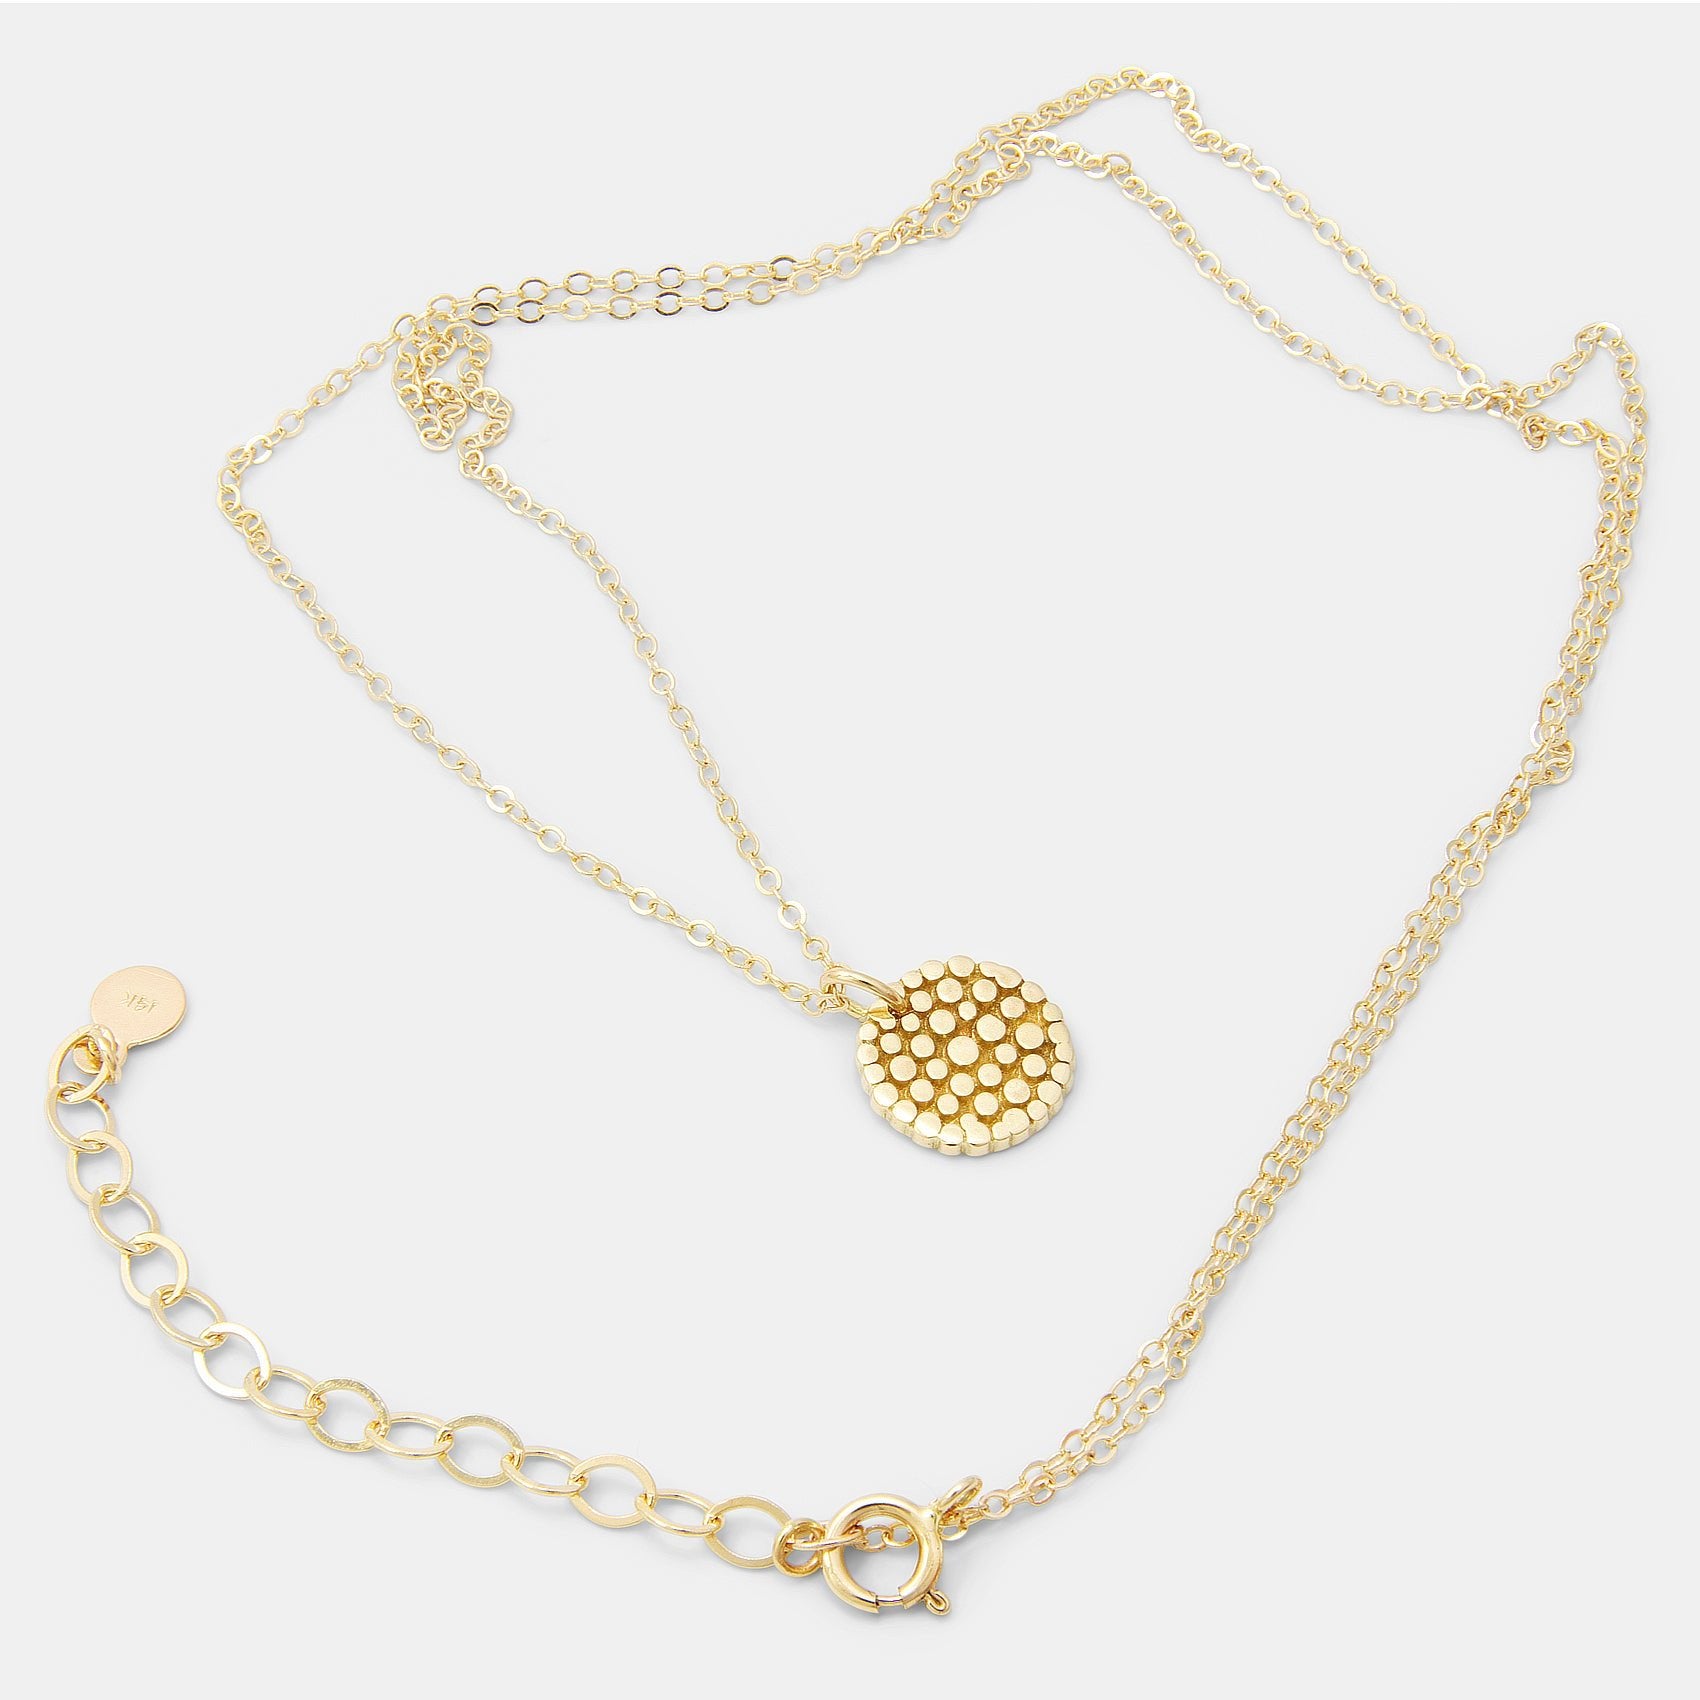 Wattle Blossom Solid Gold Pendant Necklace - Simone Walsh Jewellery Australia